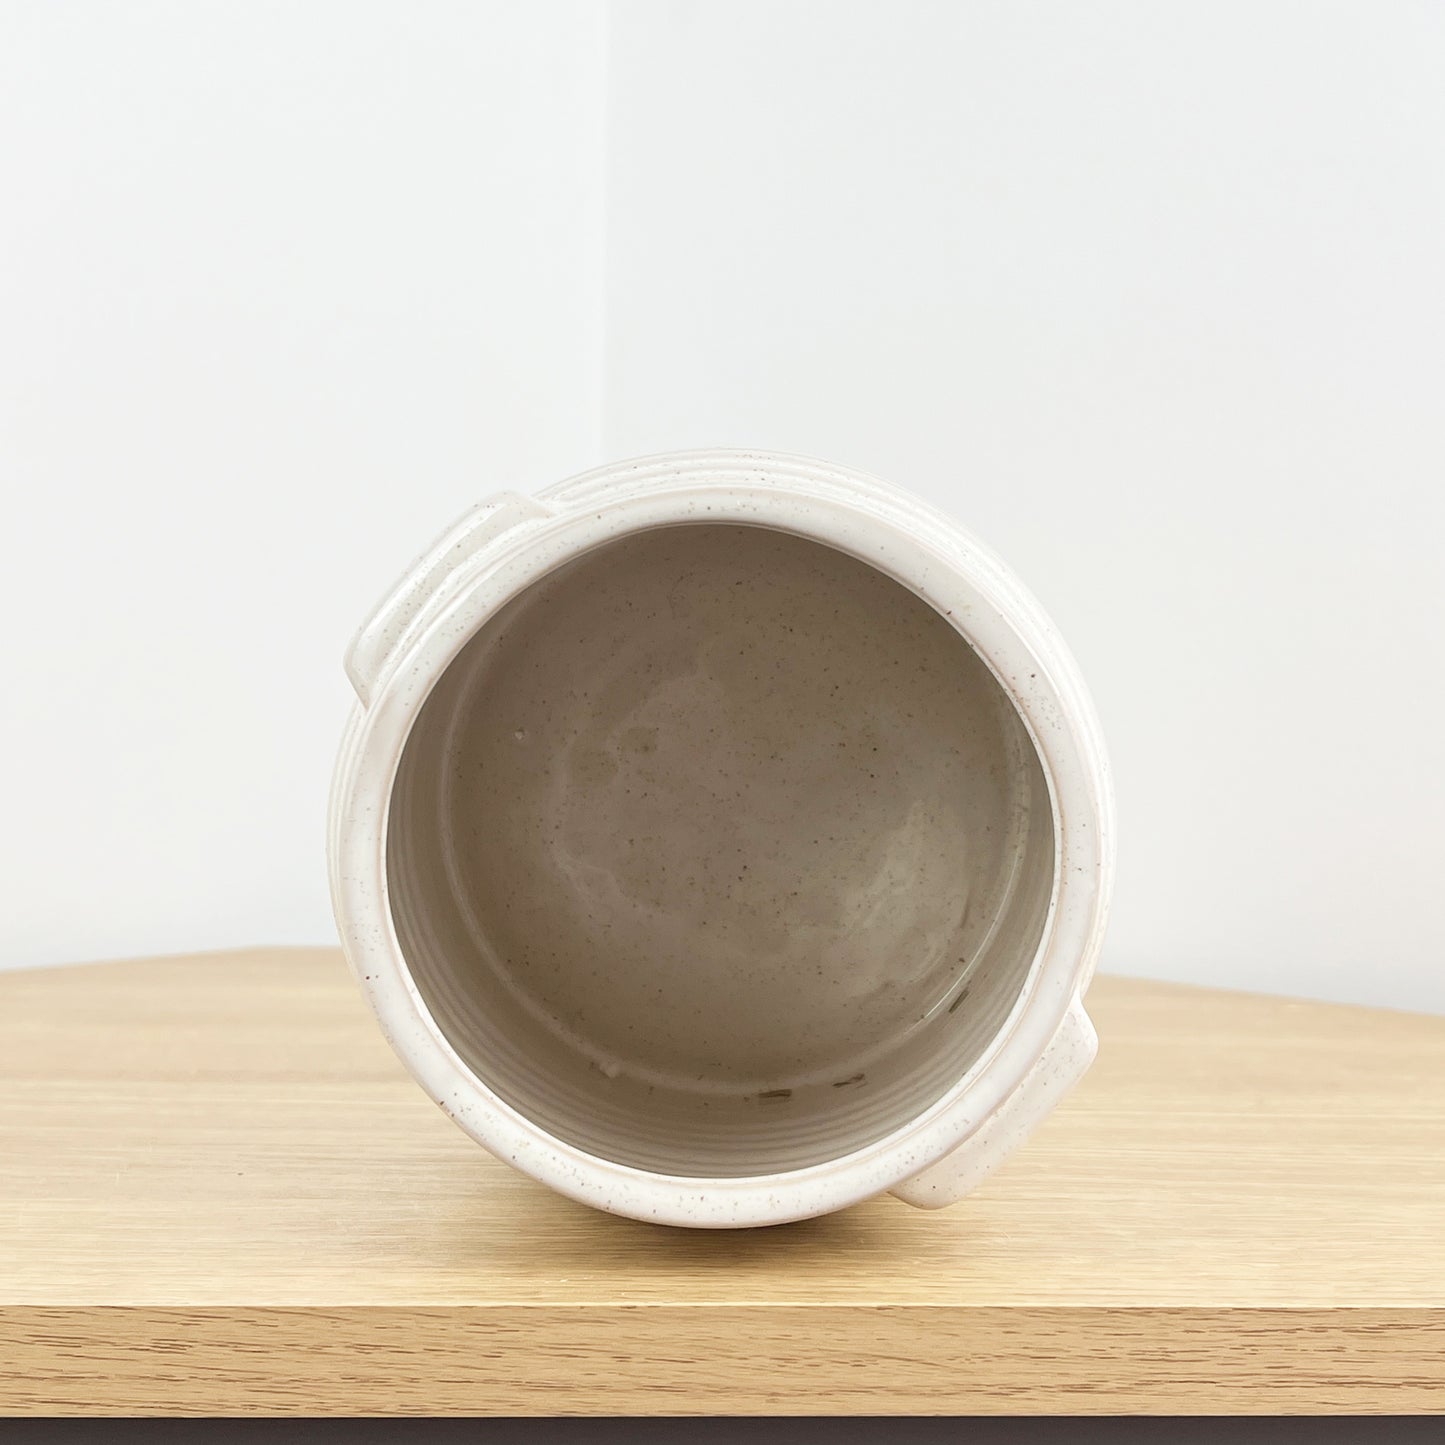 Ribbed Ceramic Plant Pot Holder - Neutral Home Decoration